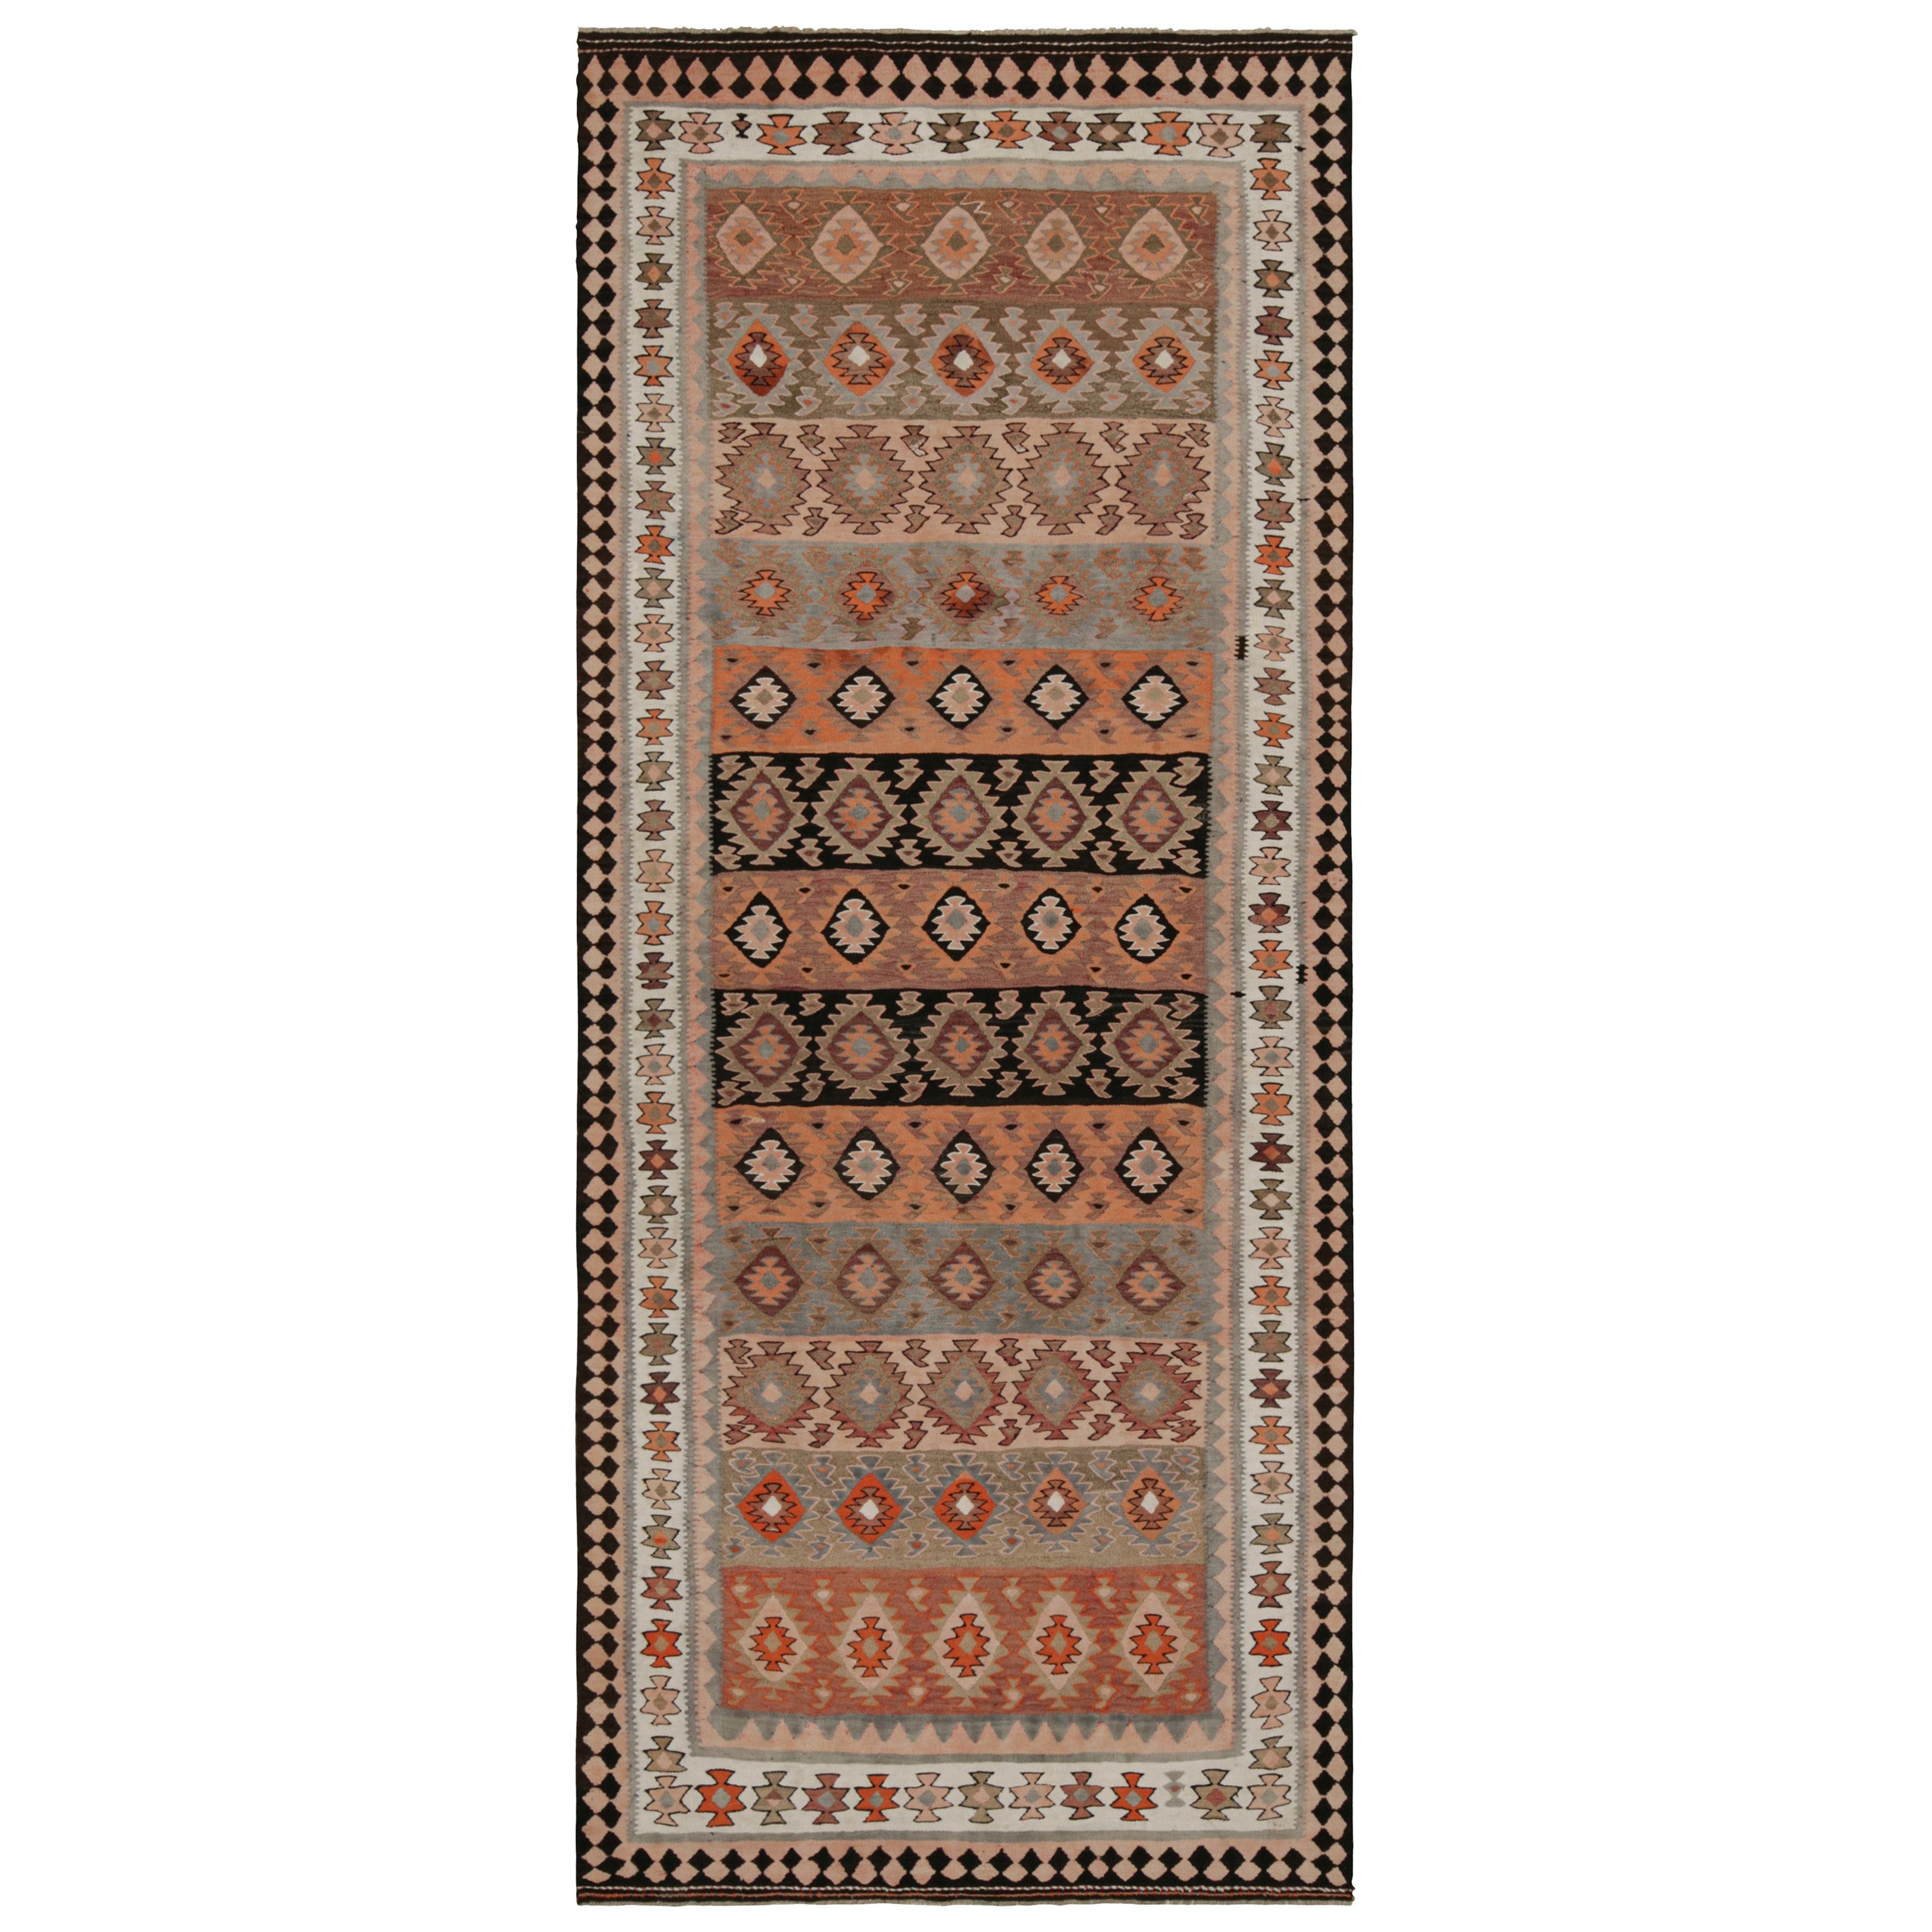 Vintage Afghan Tribal Kilim with Polychromatic Patterns by Rug & Kilim